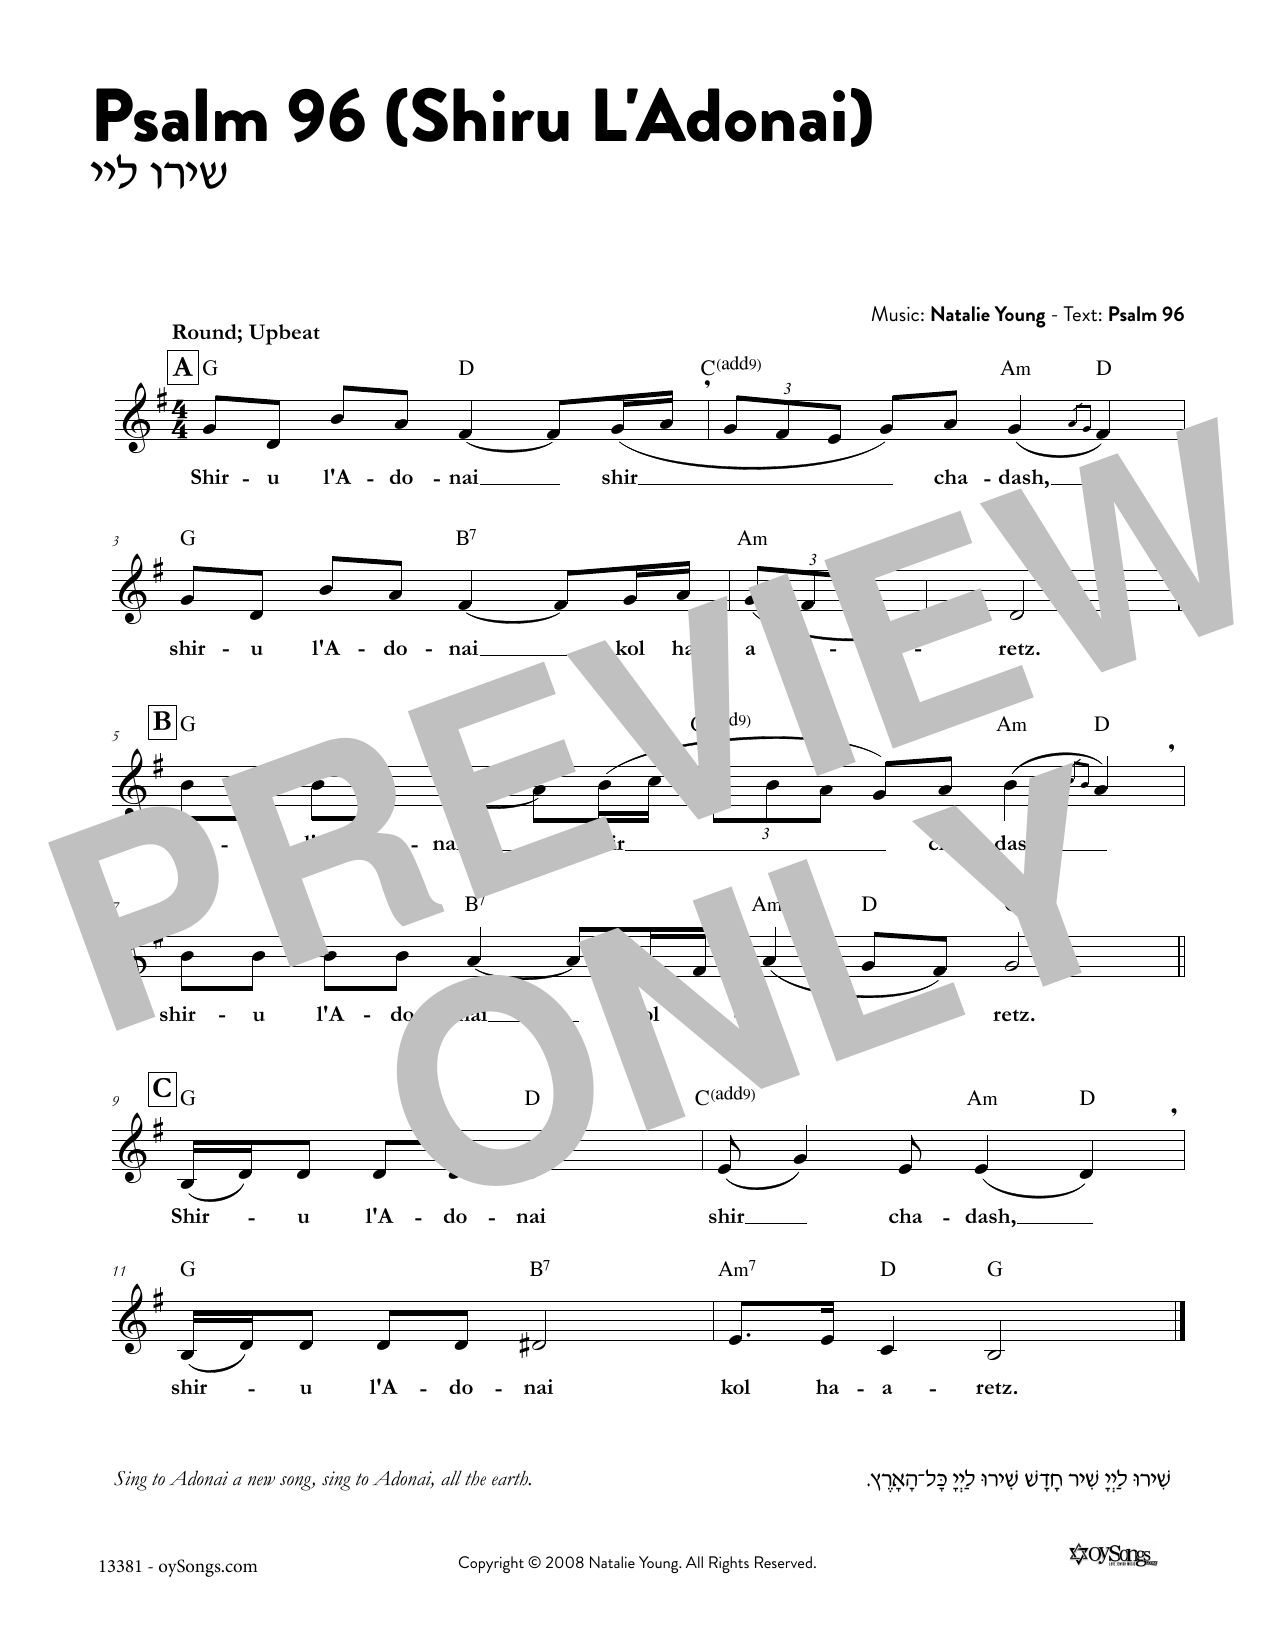 Natalie Young Psalm 96 - Shiru L'Adonai Sheet Music Notes & Chords for Melody Line, Lyrics & Chords - Download or Print PDF